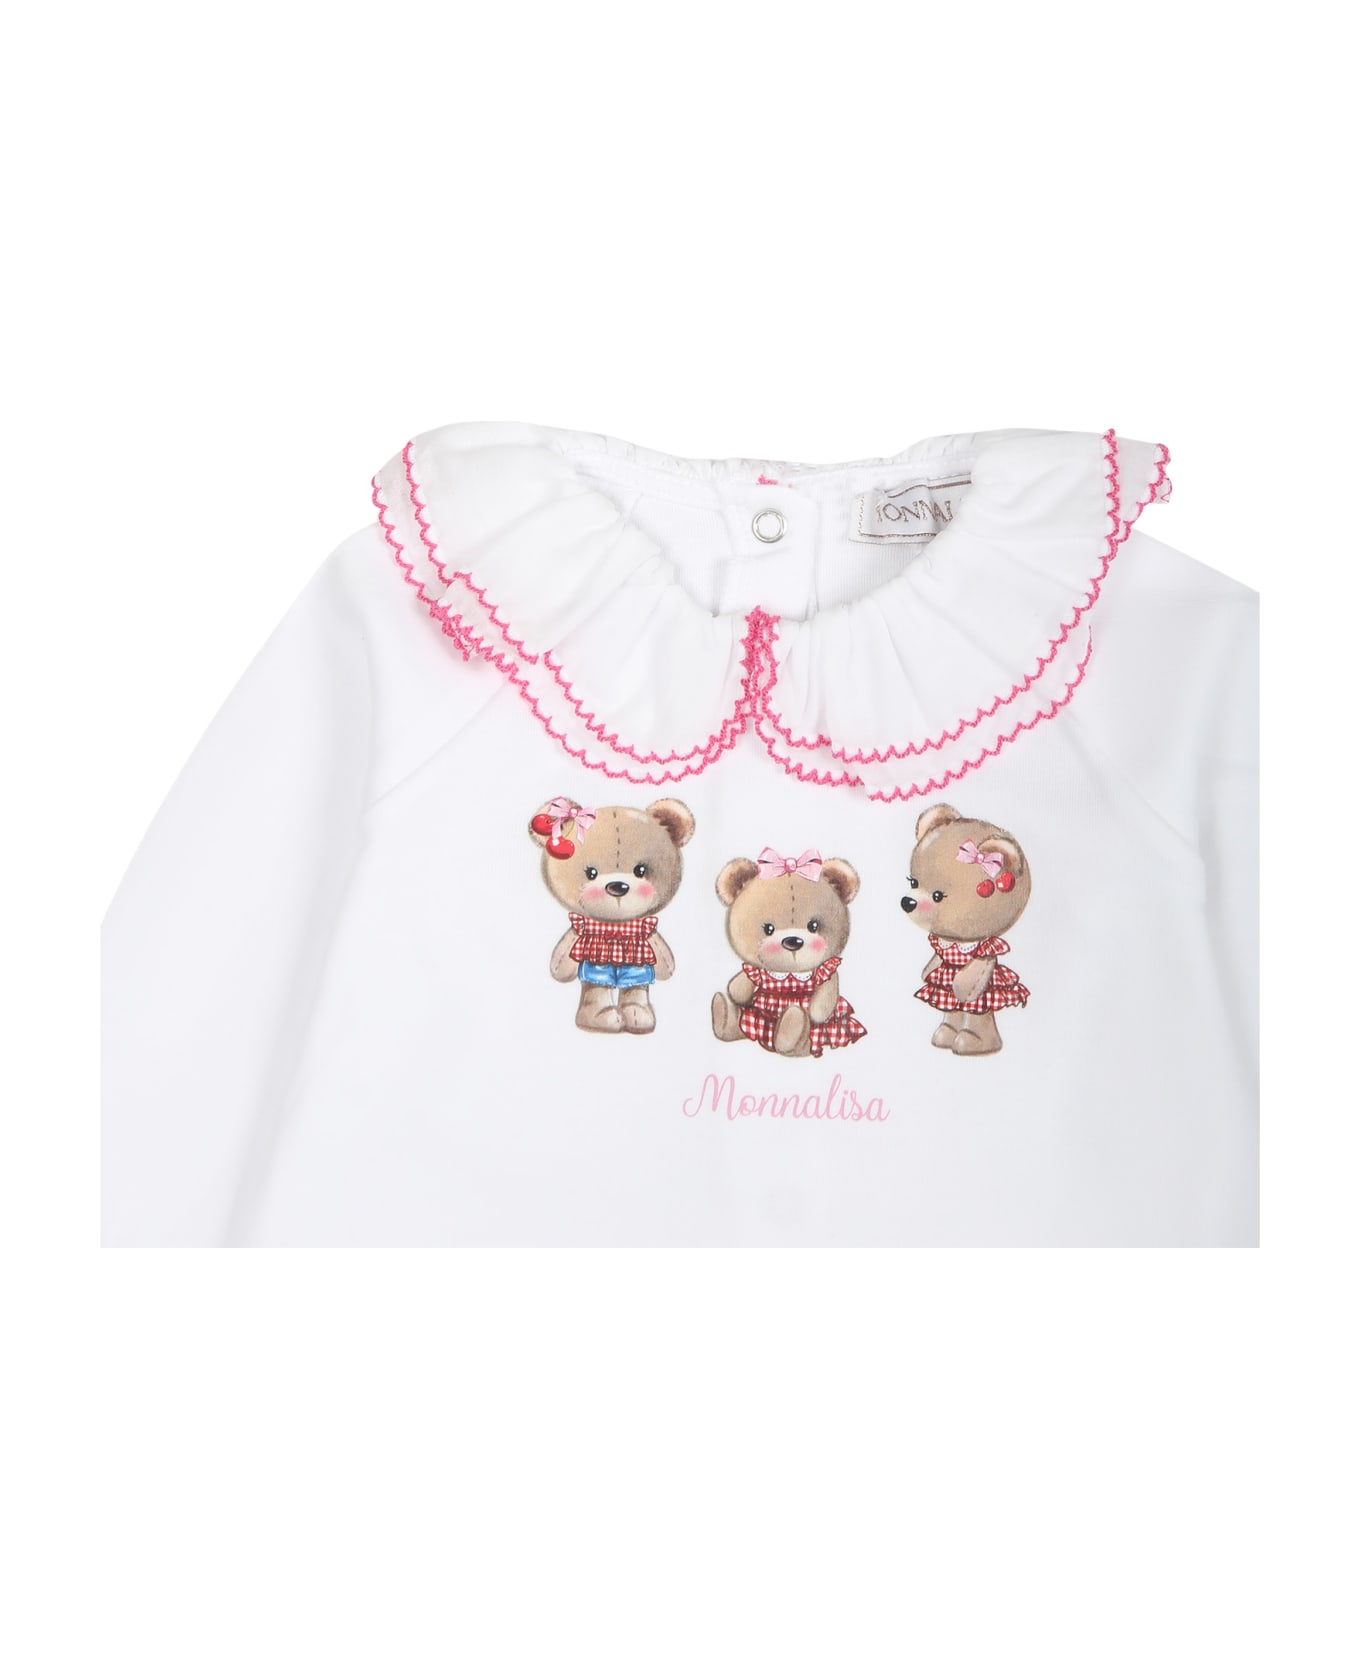 Monnalisa White Babygrown For Baby Girl With Teddy Bears - White